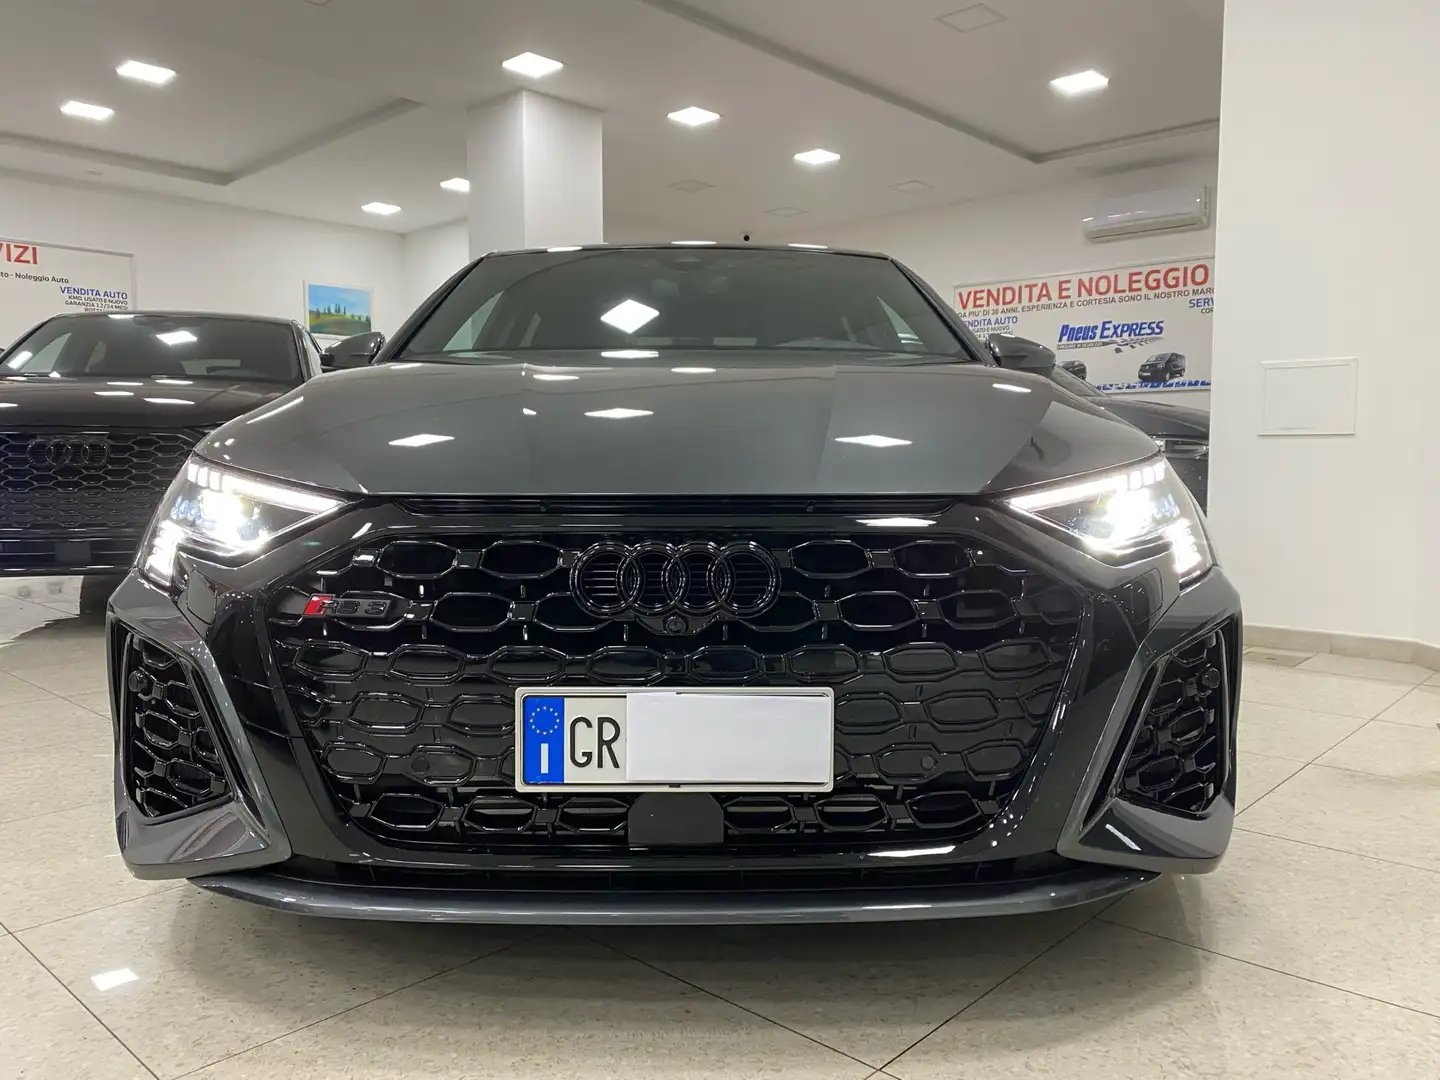 Audi RS3 usata a Crispiano - Taranto - TA per € 75.000,-